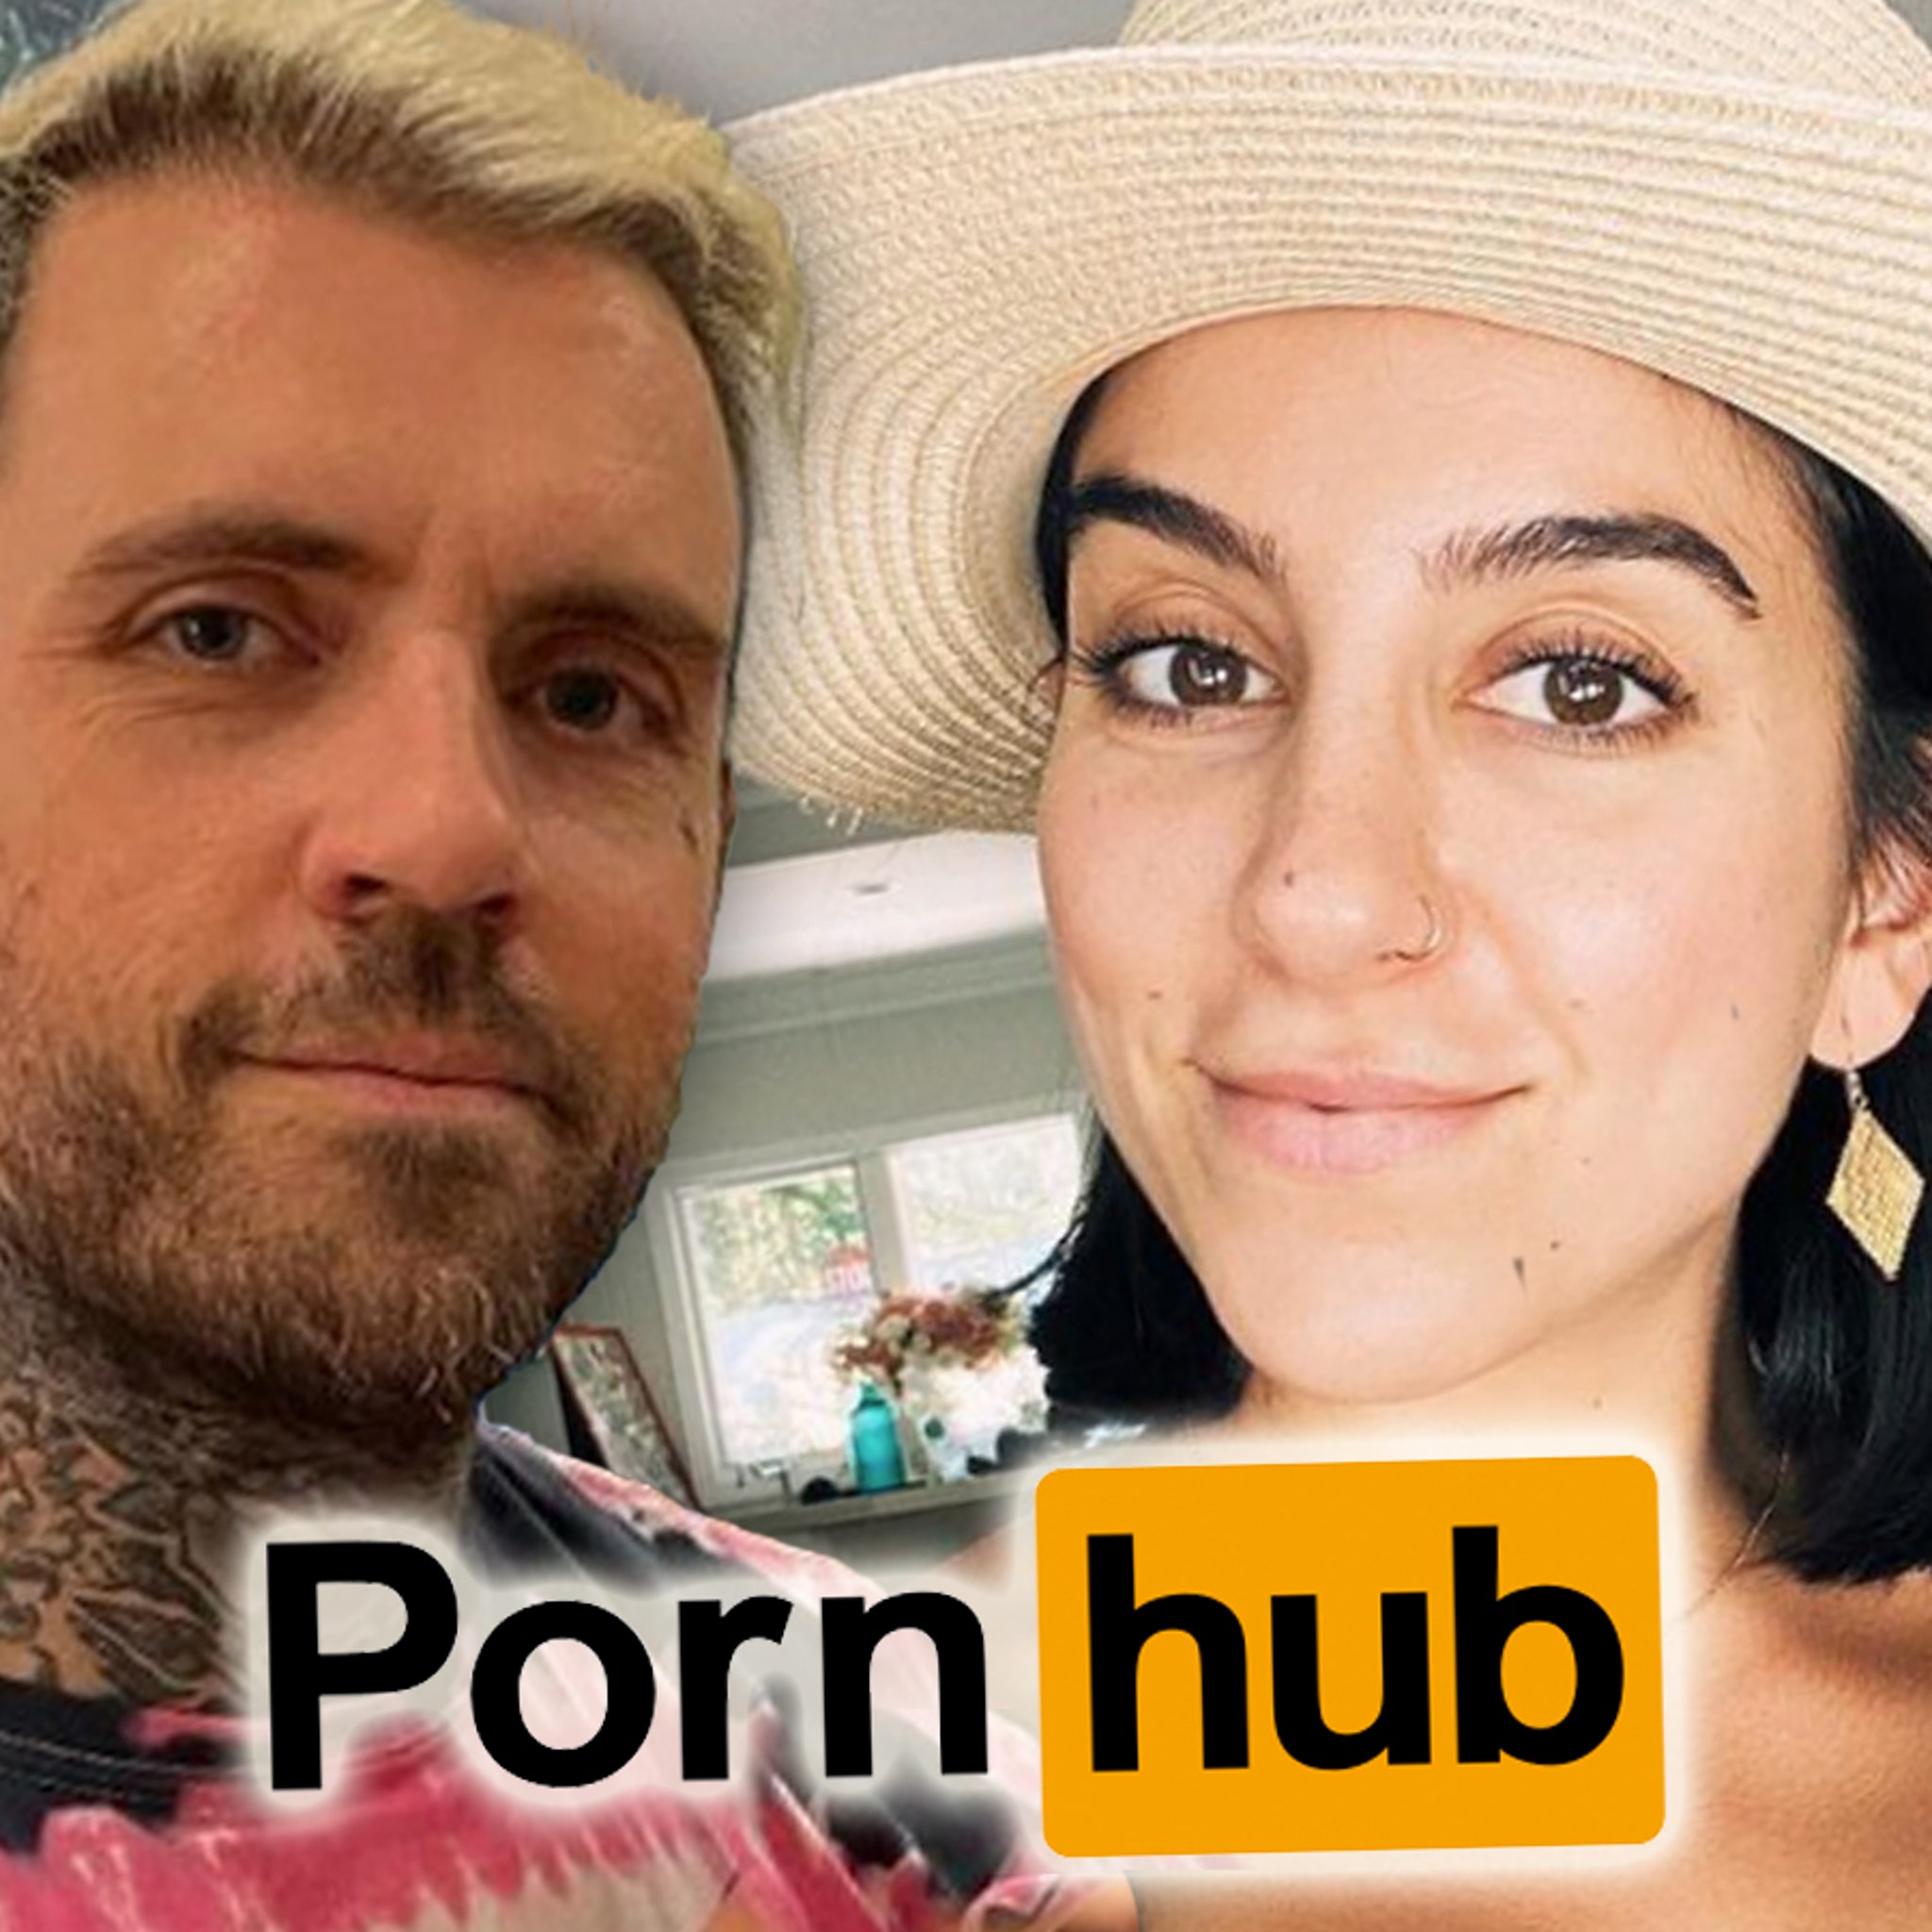 pornhub husband shares wife